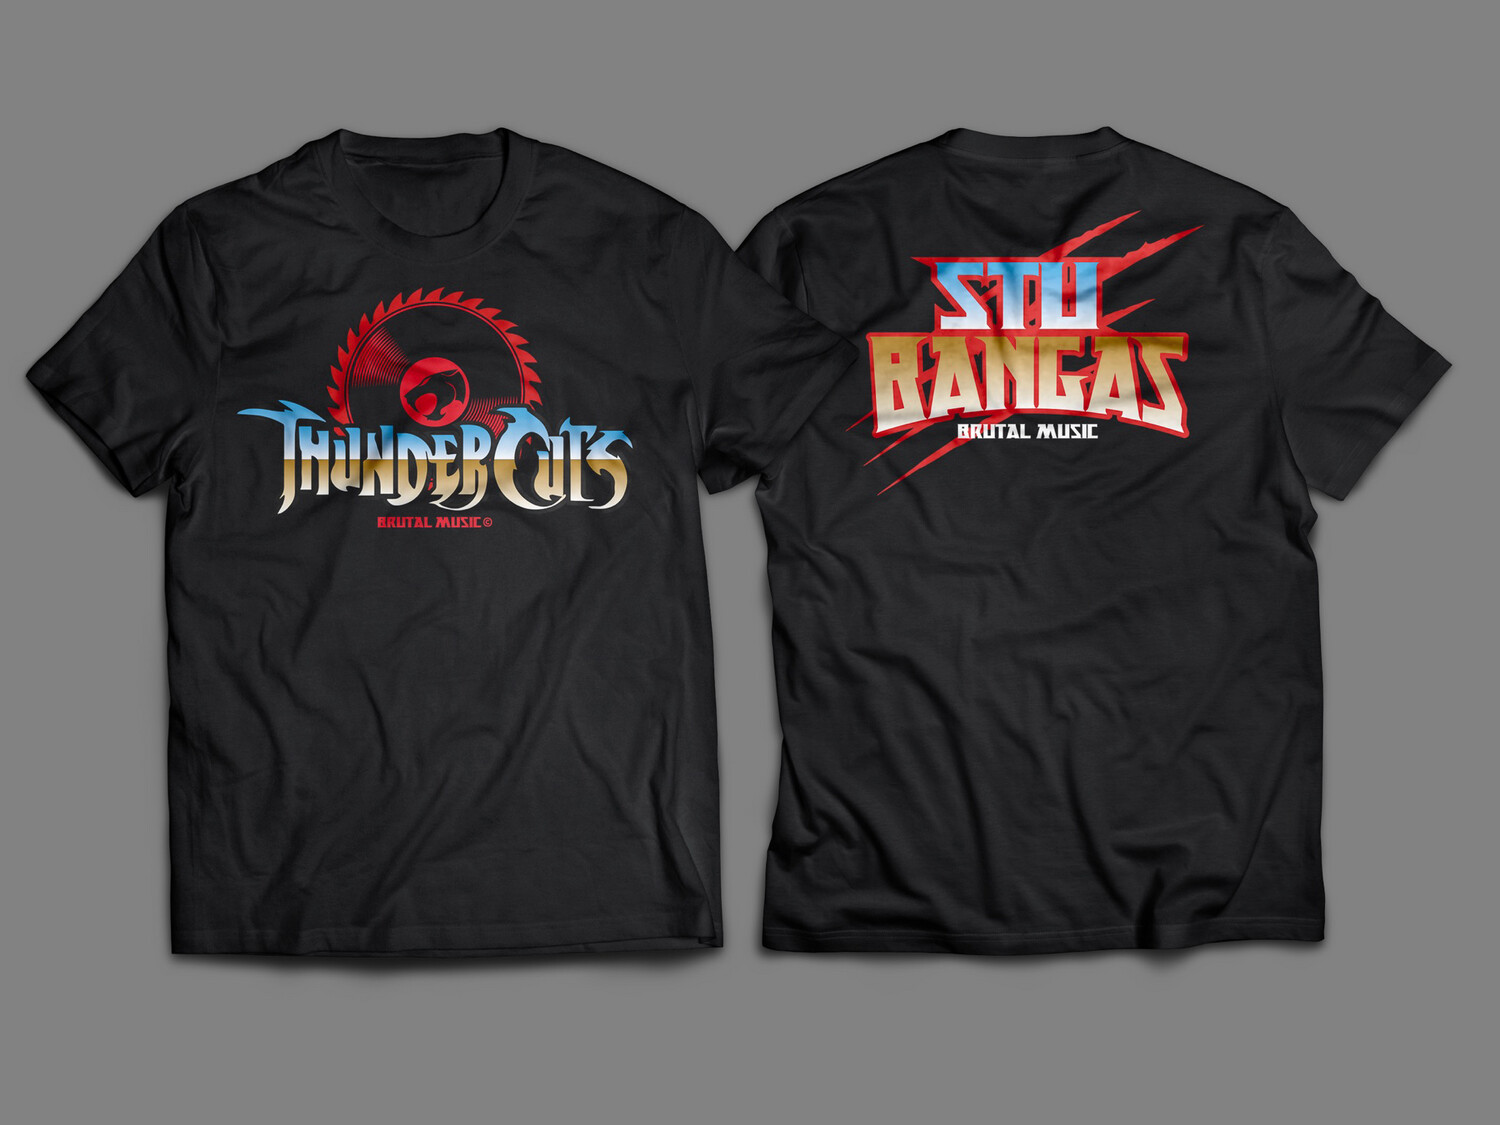 Stu Bangas “Thunder Cuts” Shirt (20 TOTAL!)